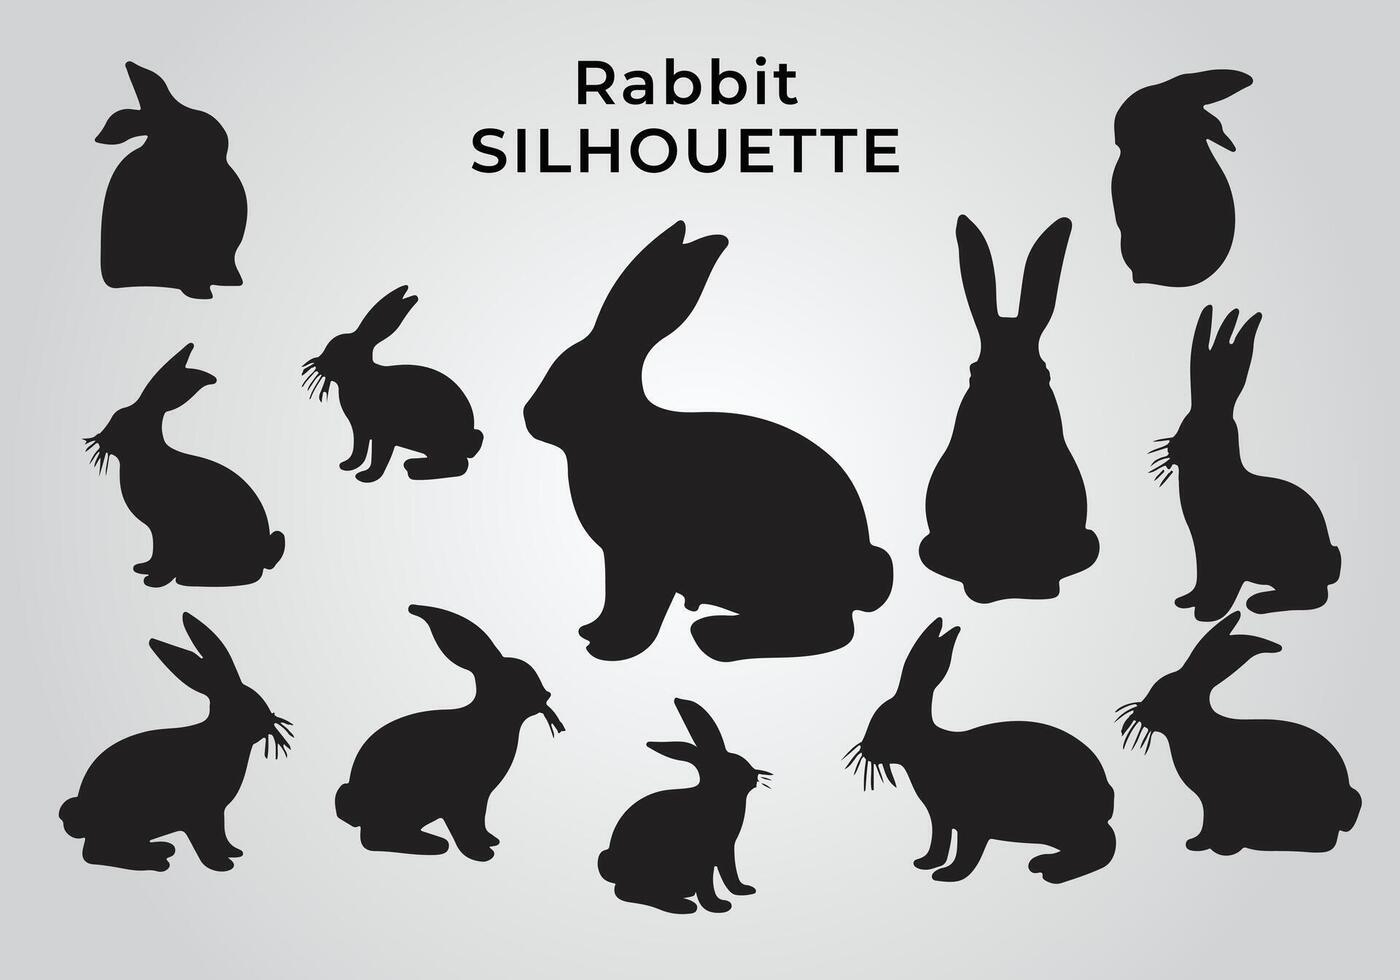 Rabbit silhouette download.easter rabbit silhouette vector